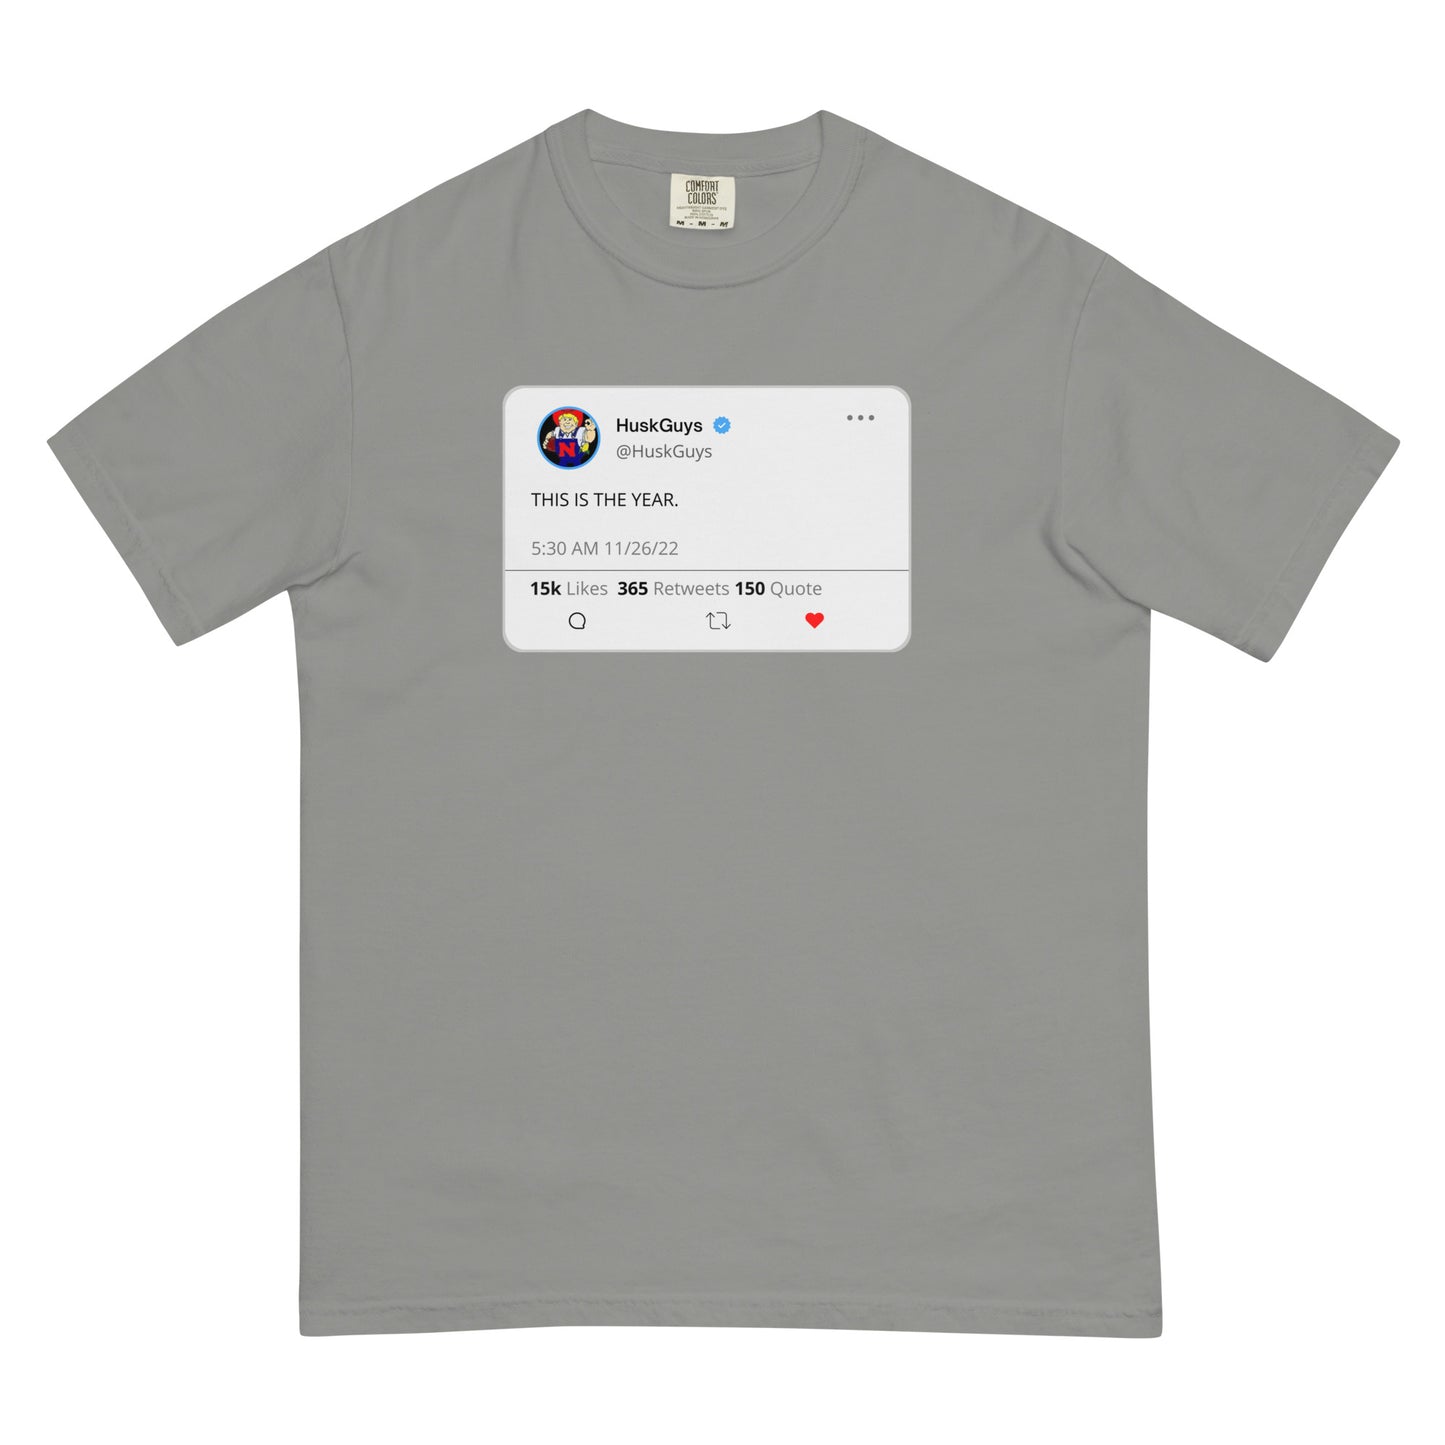 HuskGuys Tweet T-shirt